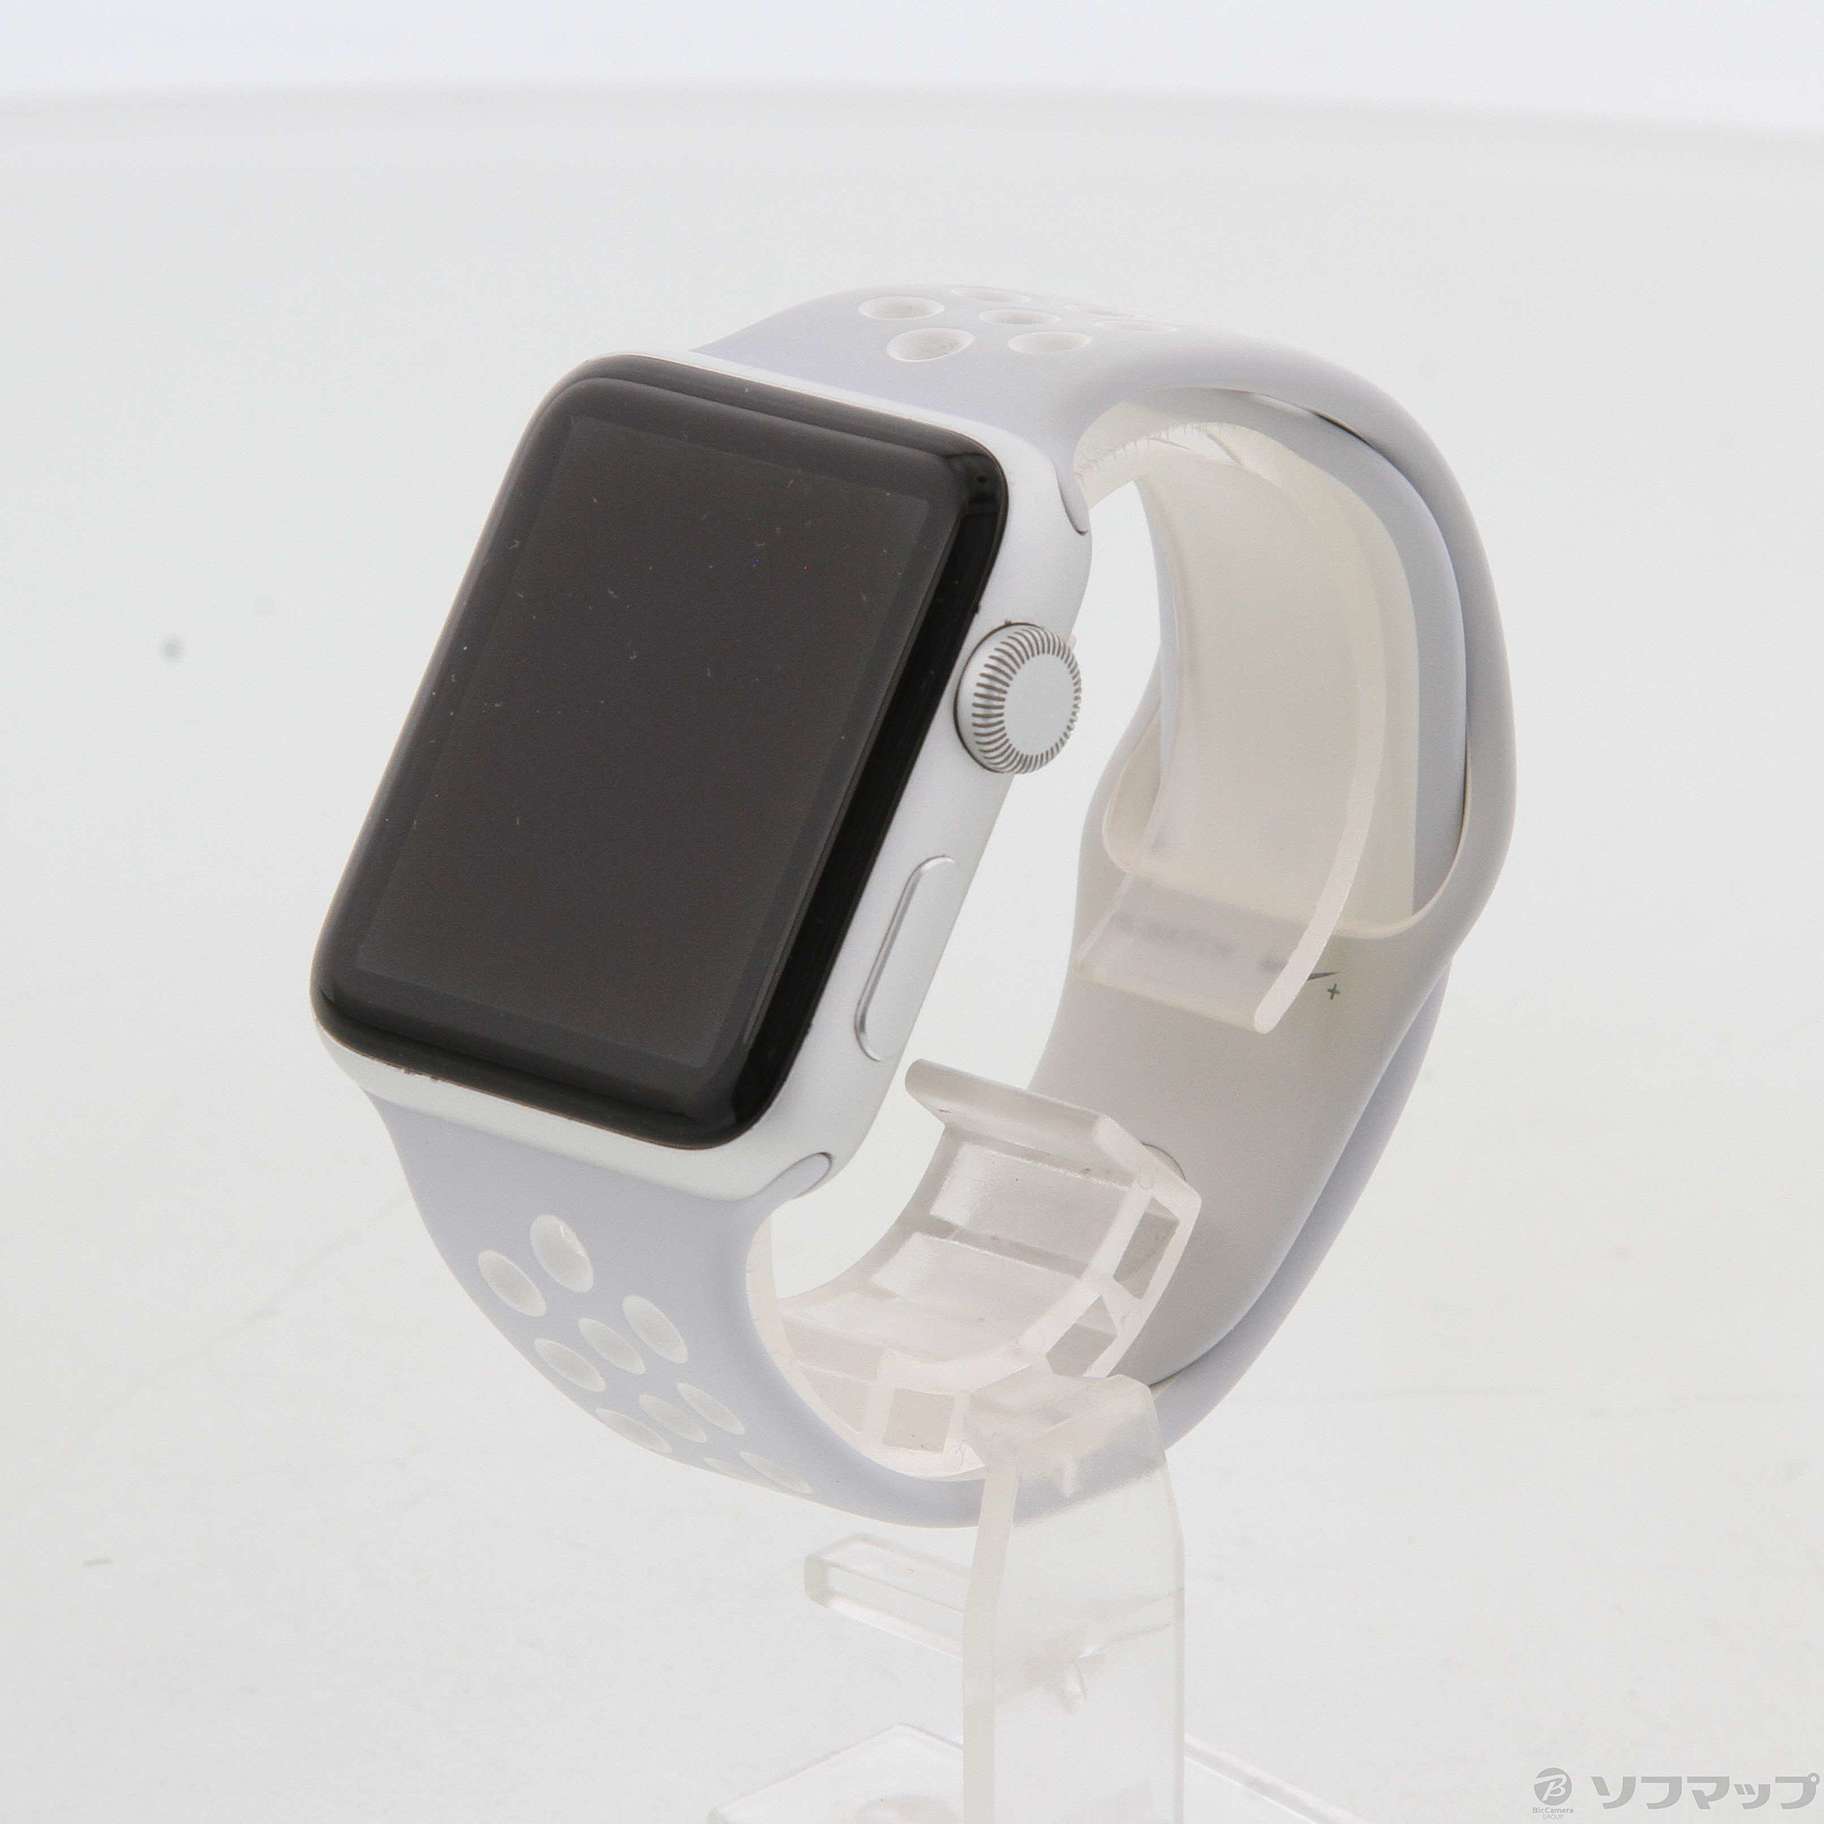 Apple Watch series 2 シルバーアルミニウムケース42mm-